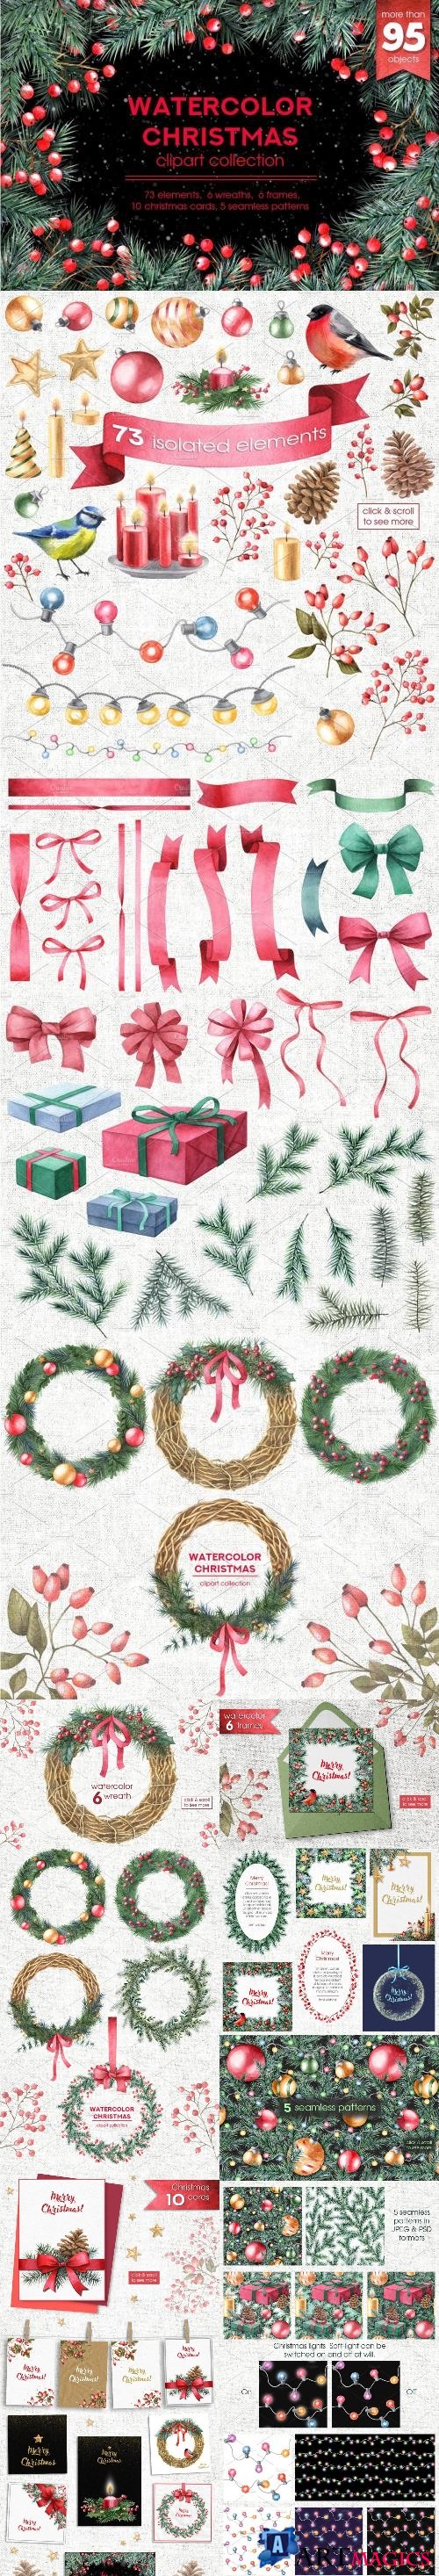 Watercolor Christmas cliparts - 2063867